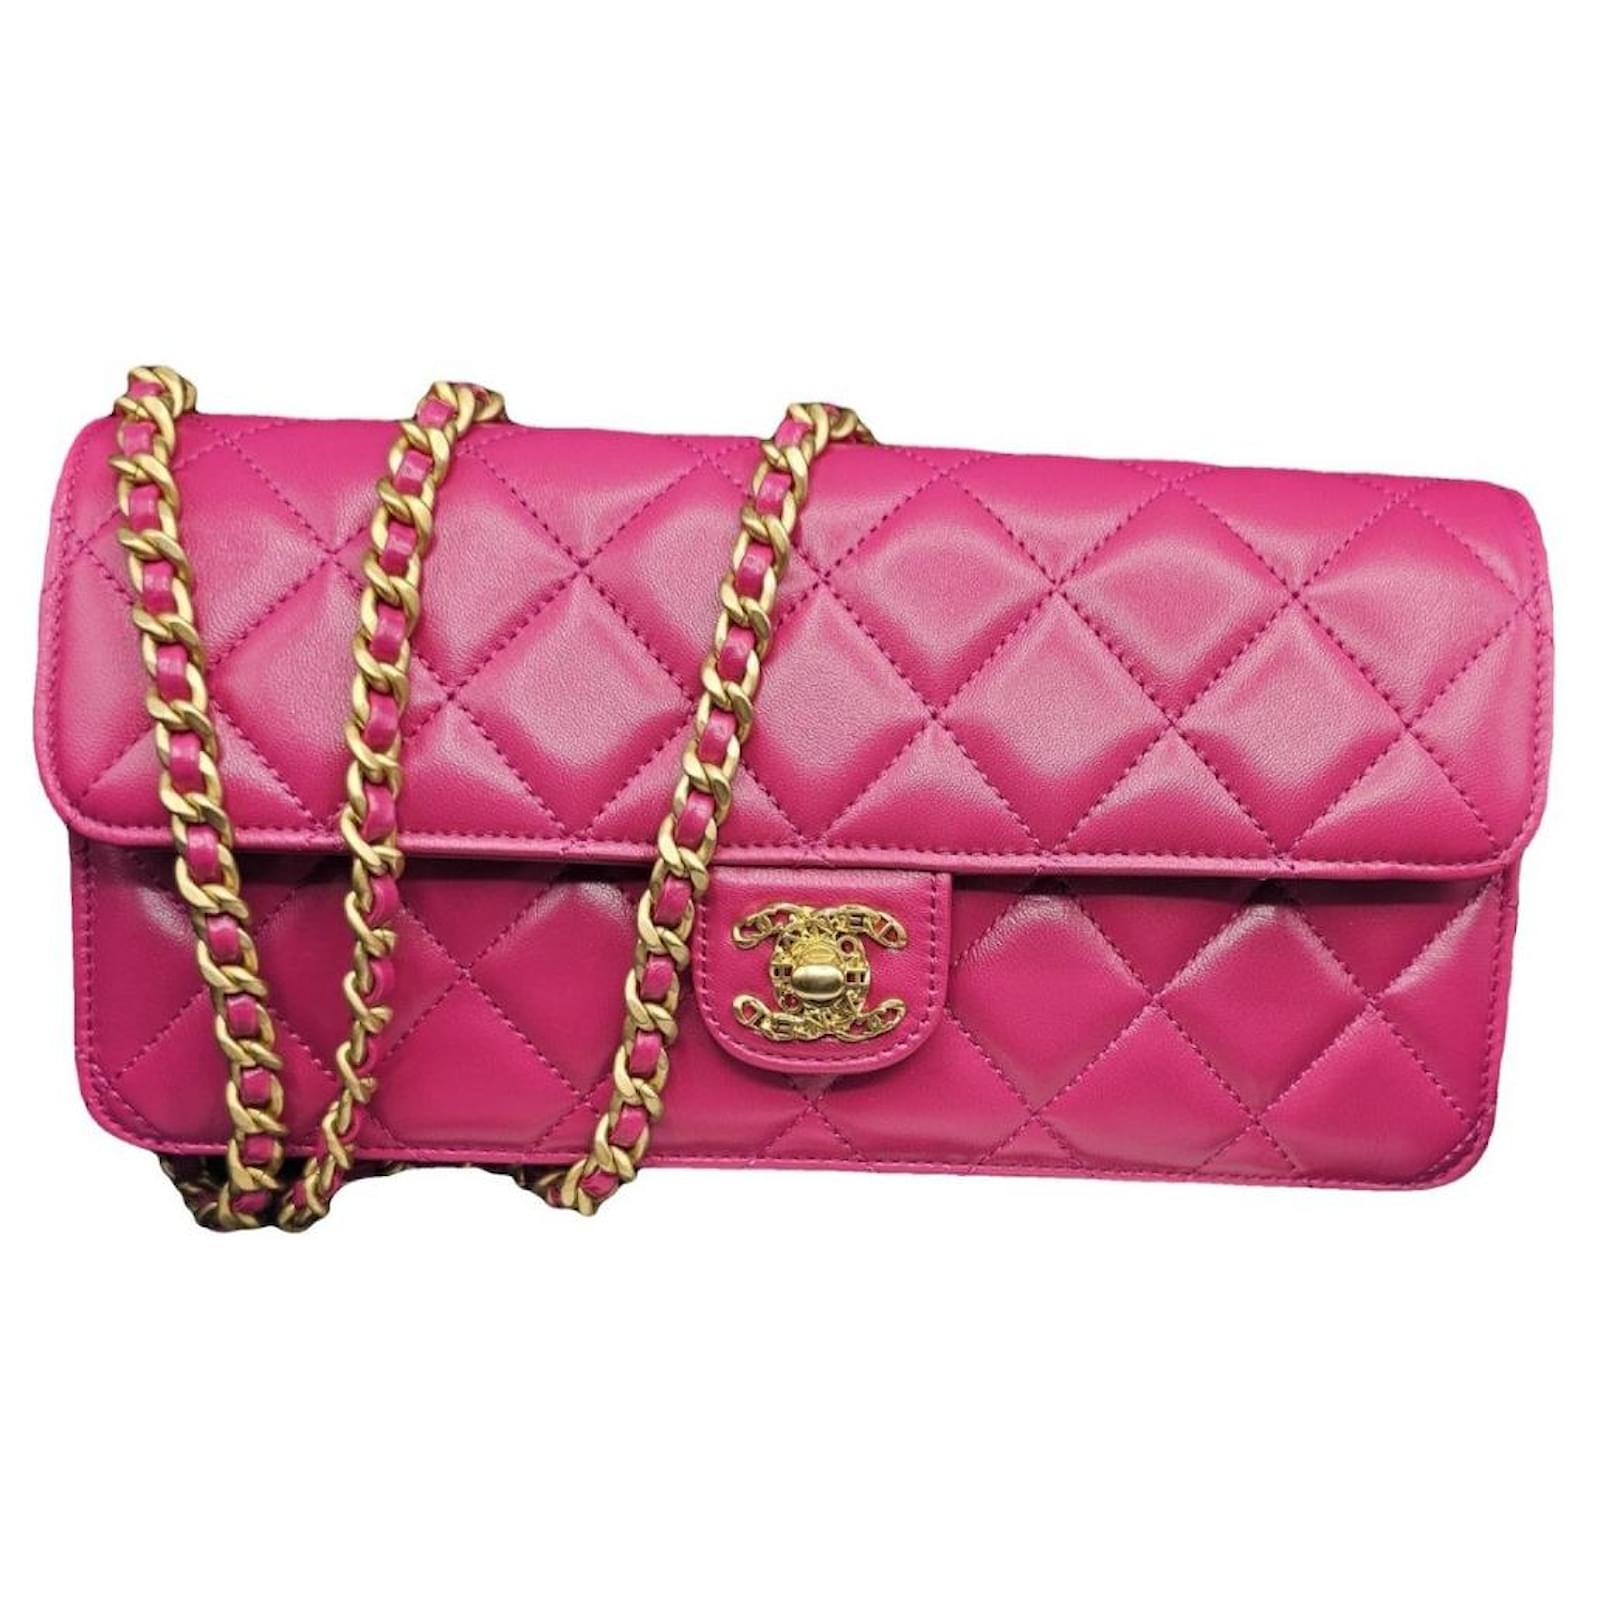 Handbags Chanel Chanel Bag .